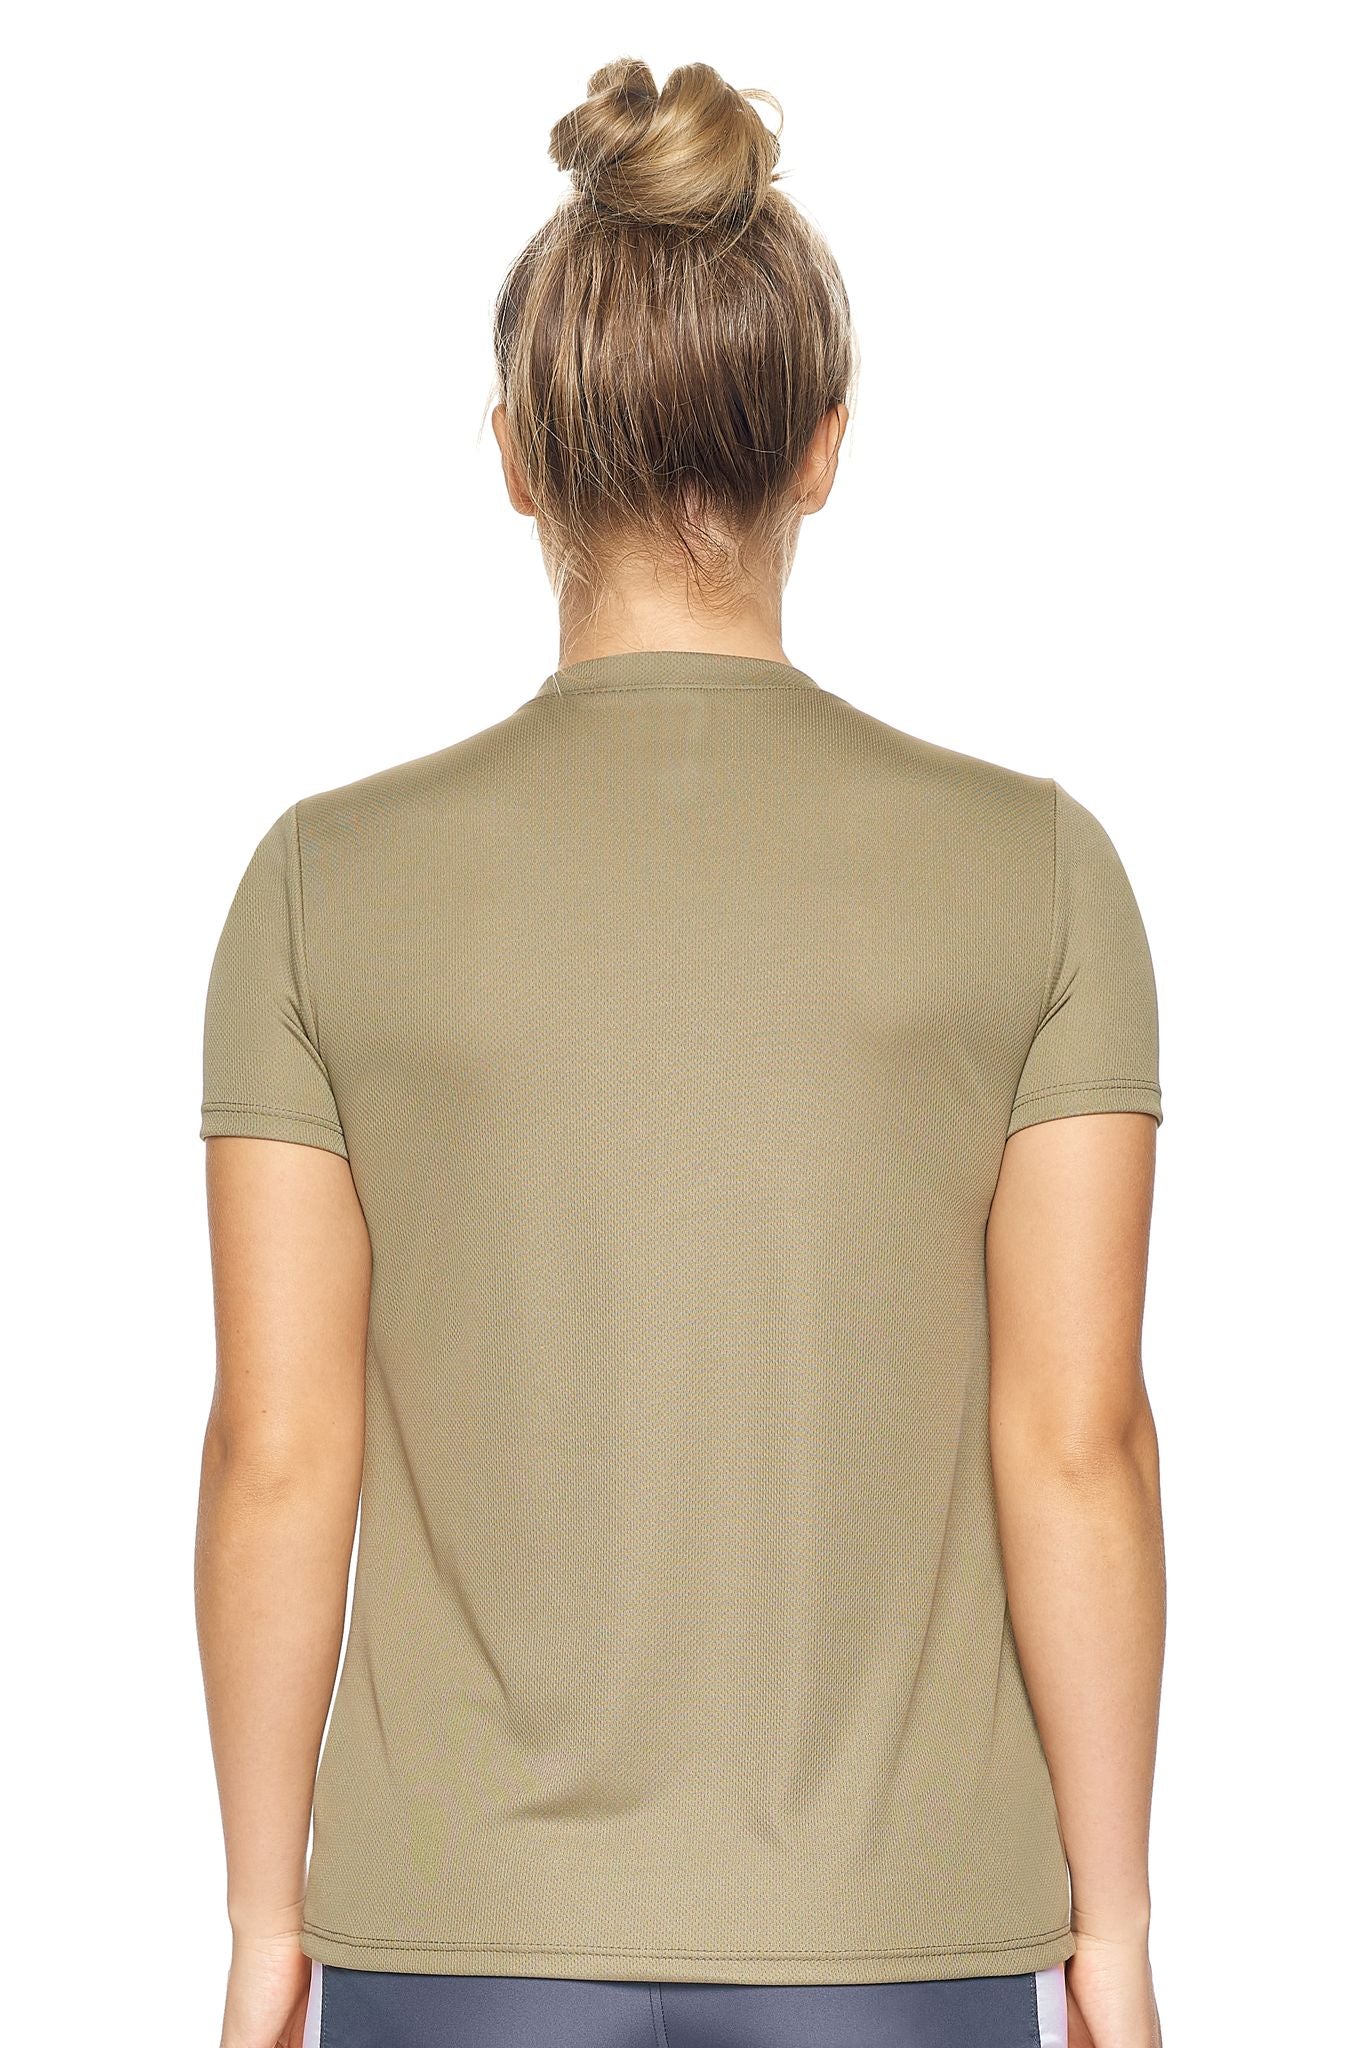 Expert Brand Wholesale Women's Oxymesh V-Neck Tec T-Shirt in Tan Image 3#tan